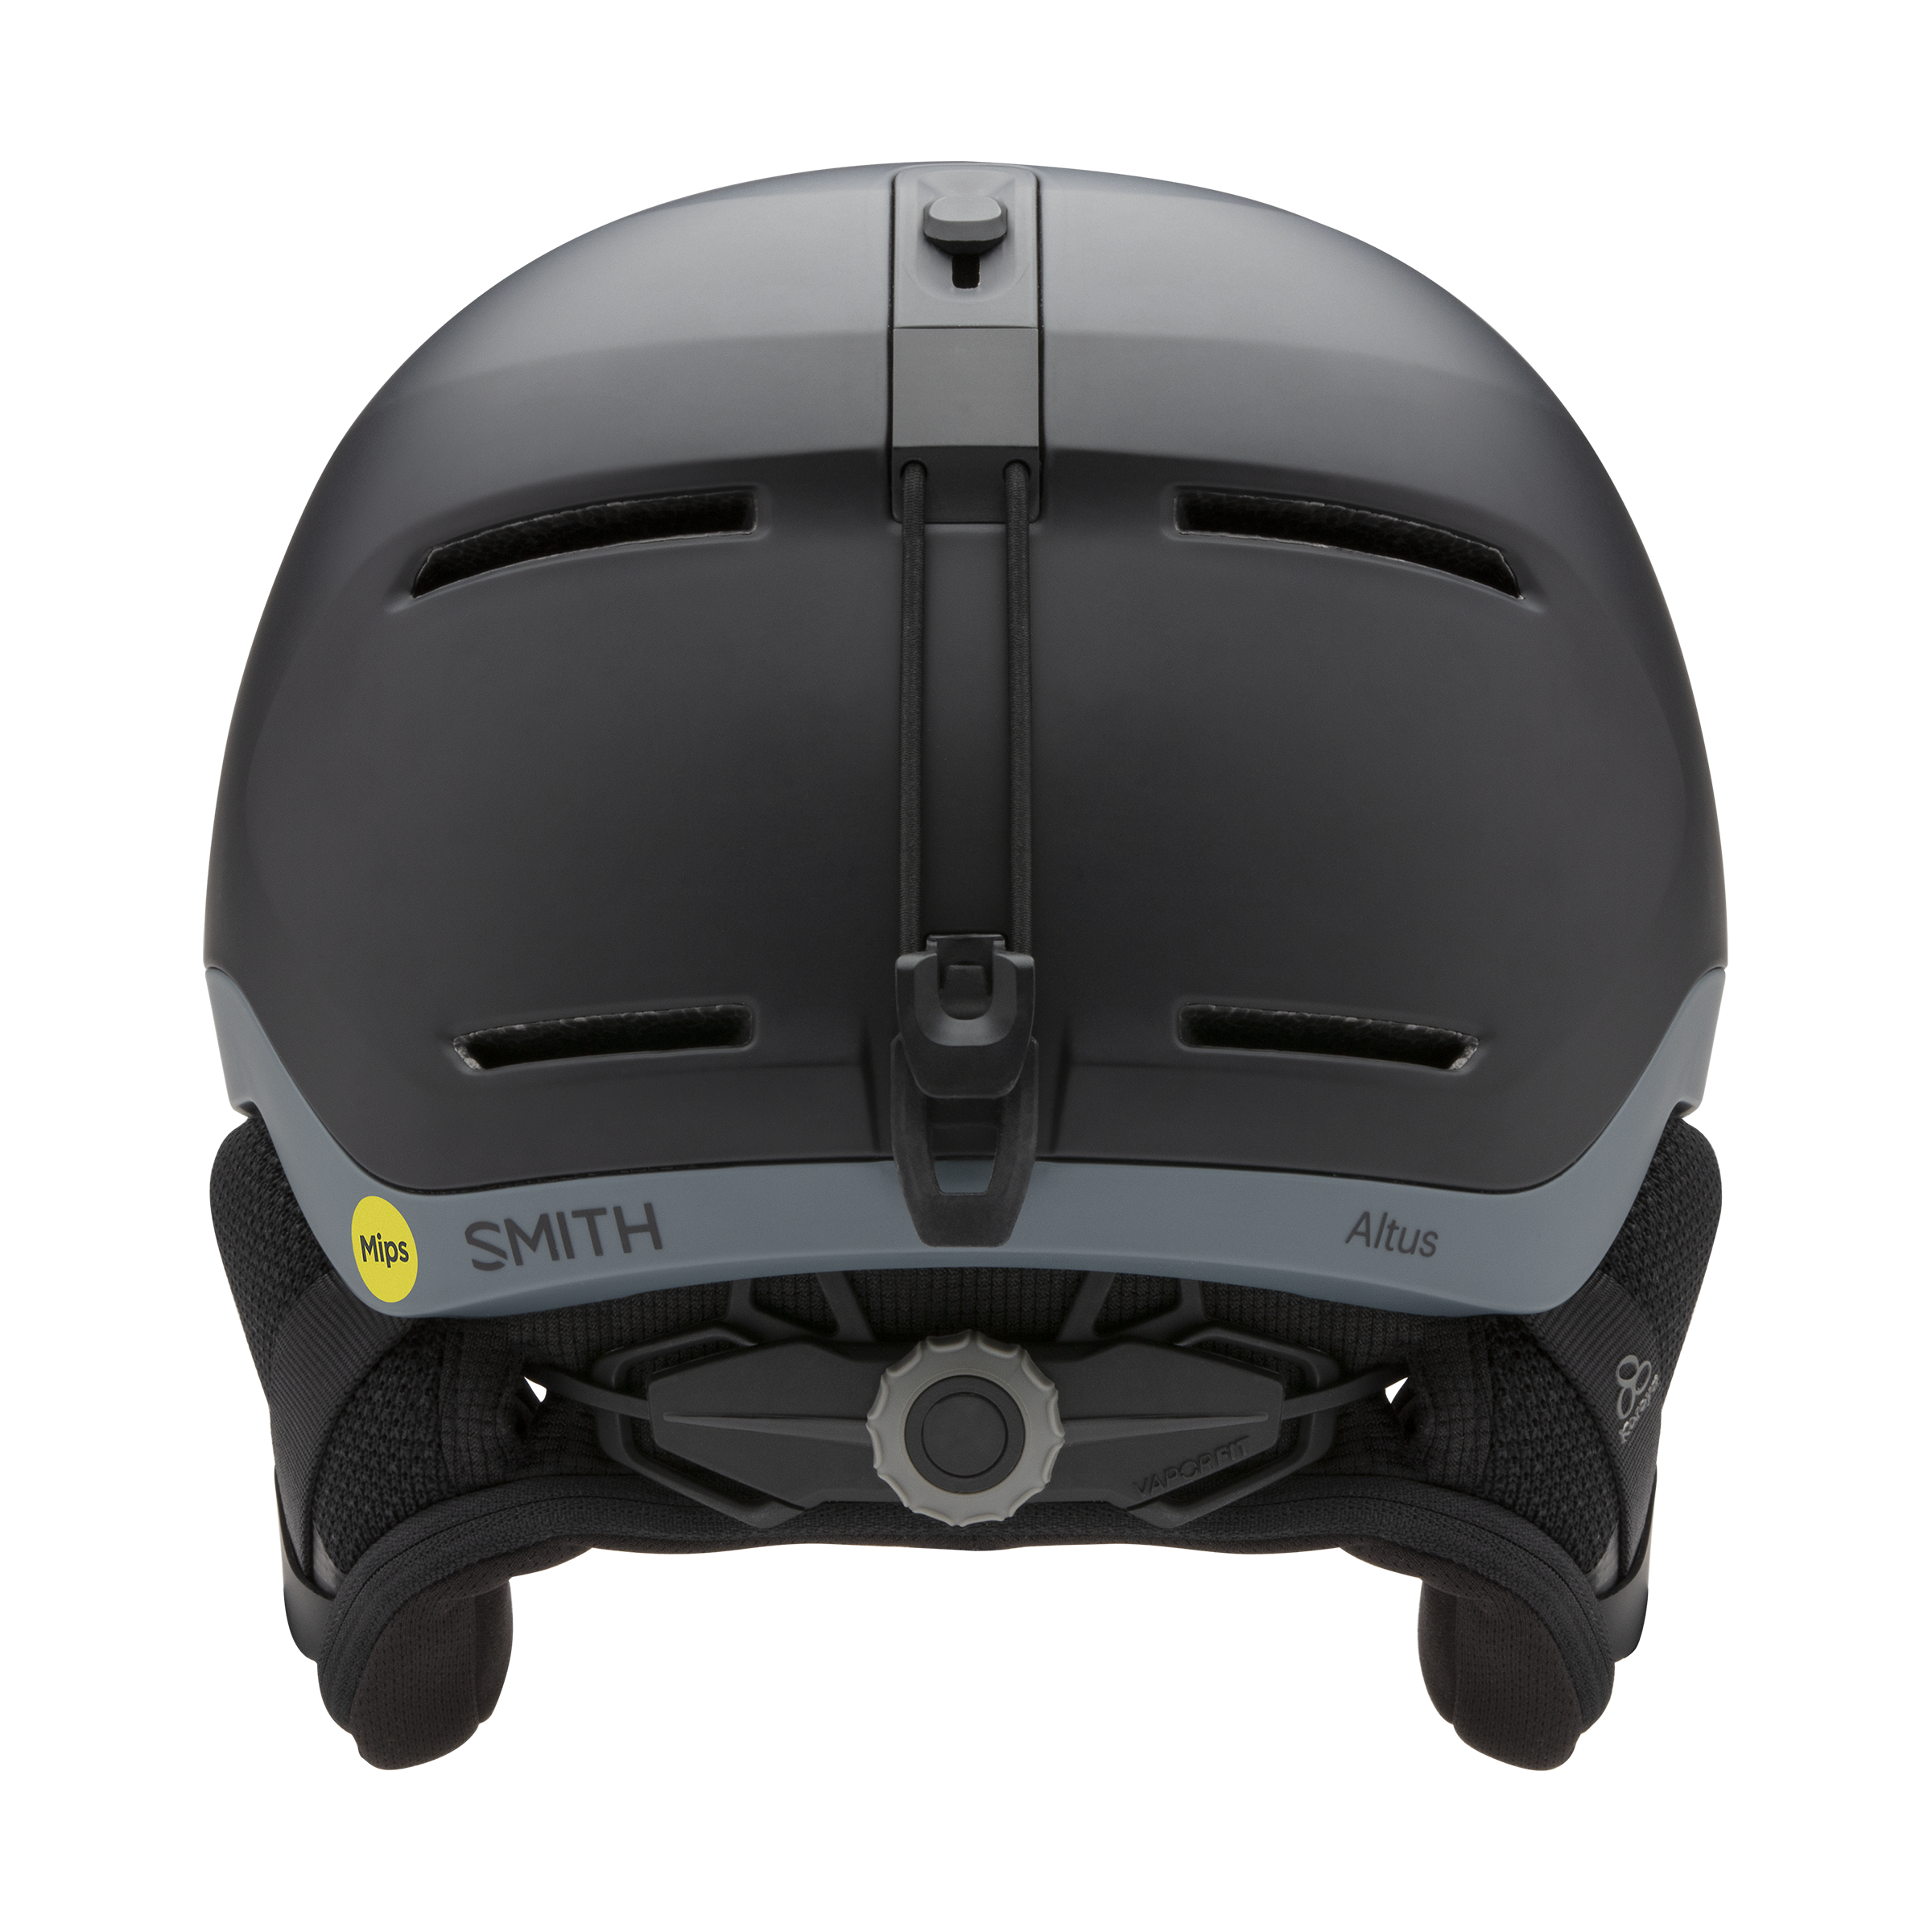 L 2021 Smith Optics Altus MIPS Snowboard Ski Helmet Matte Black/Charcoal 